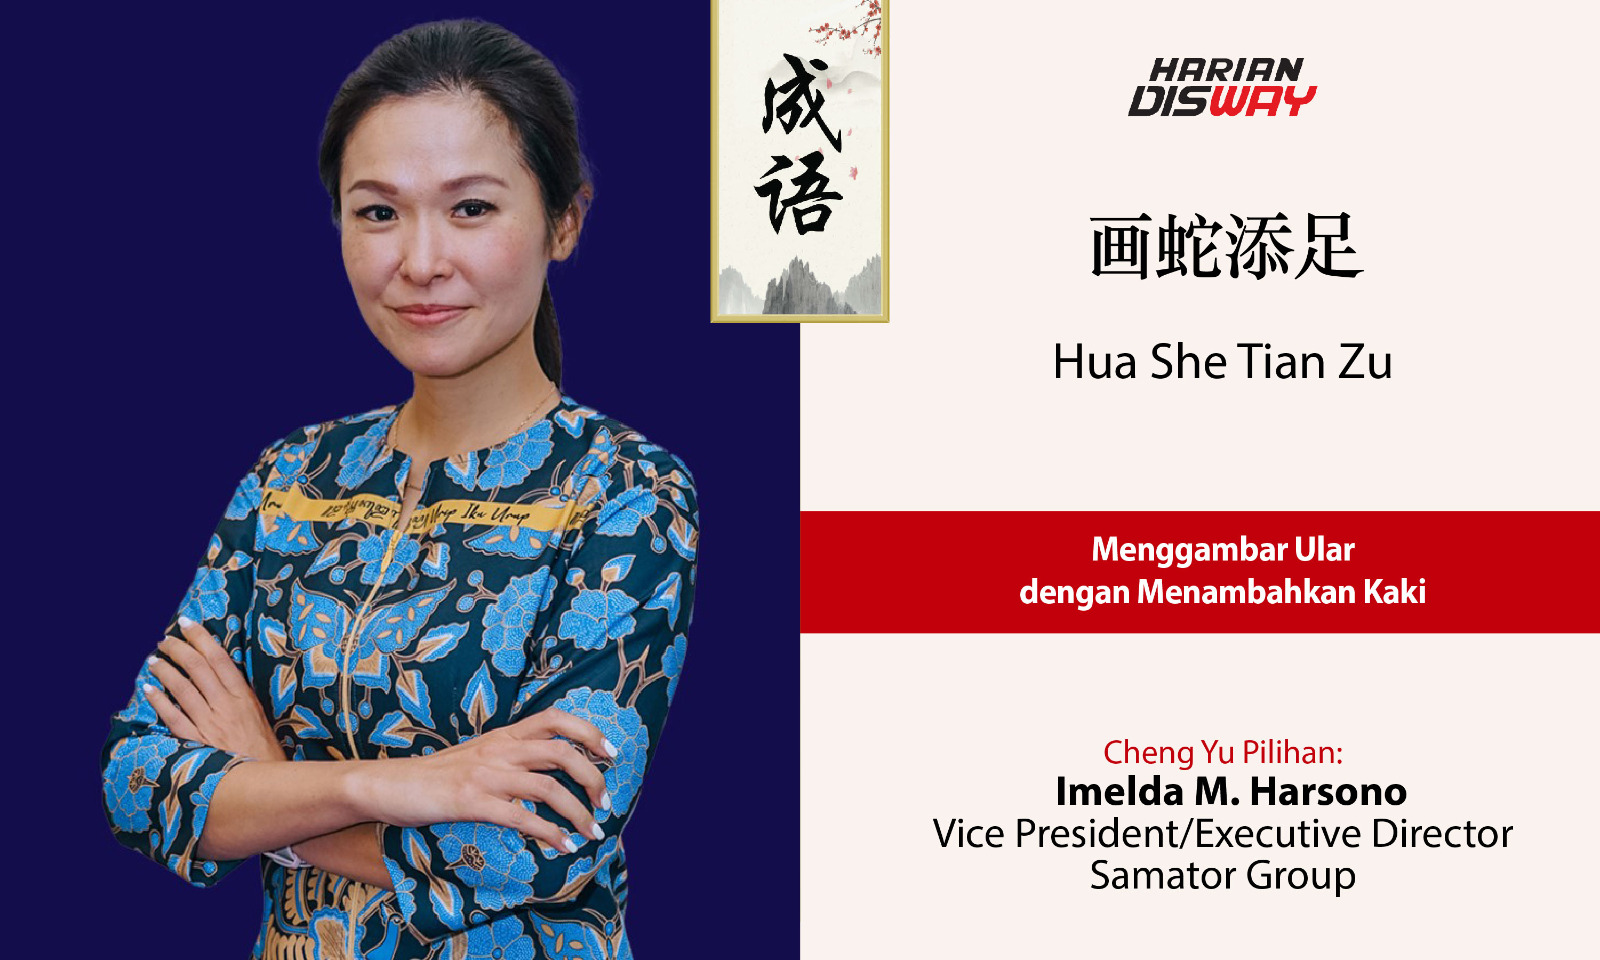 Cheng Yu Pilihan Vice President/Executive Director Samator Group Imelda M. Harsono: Hua She Tian Zu